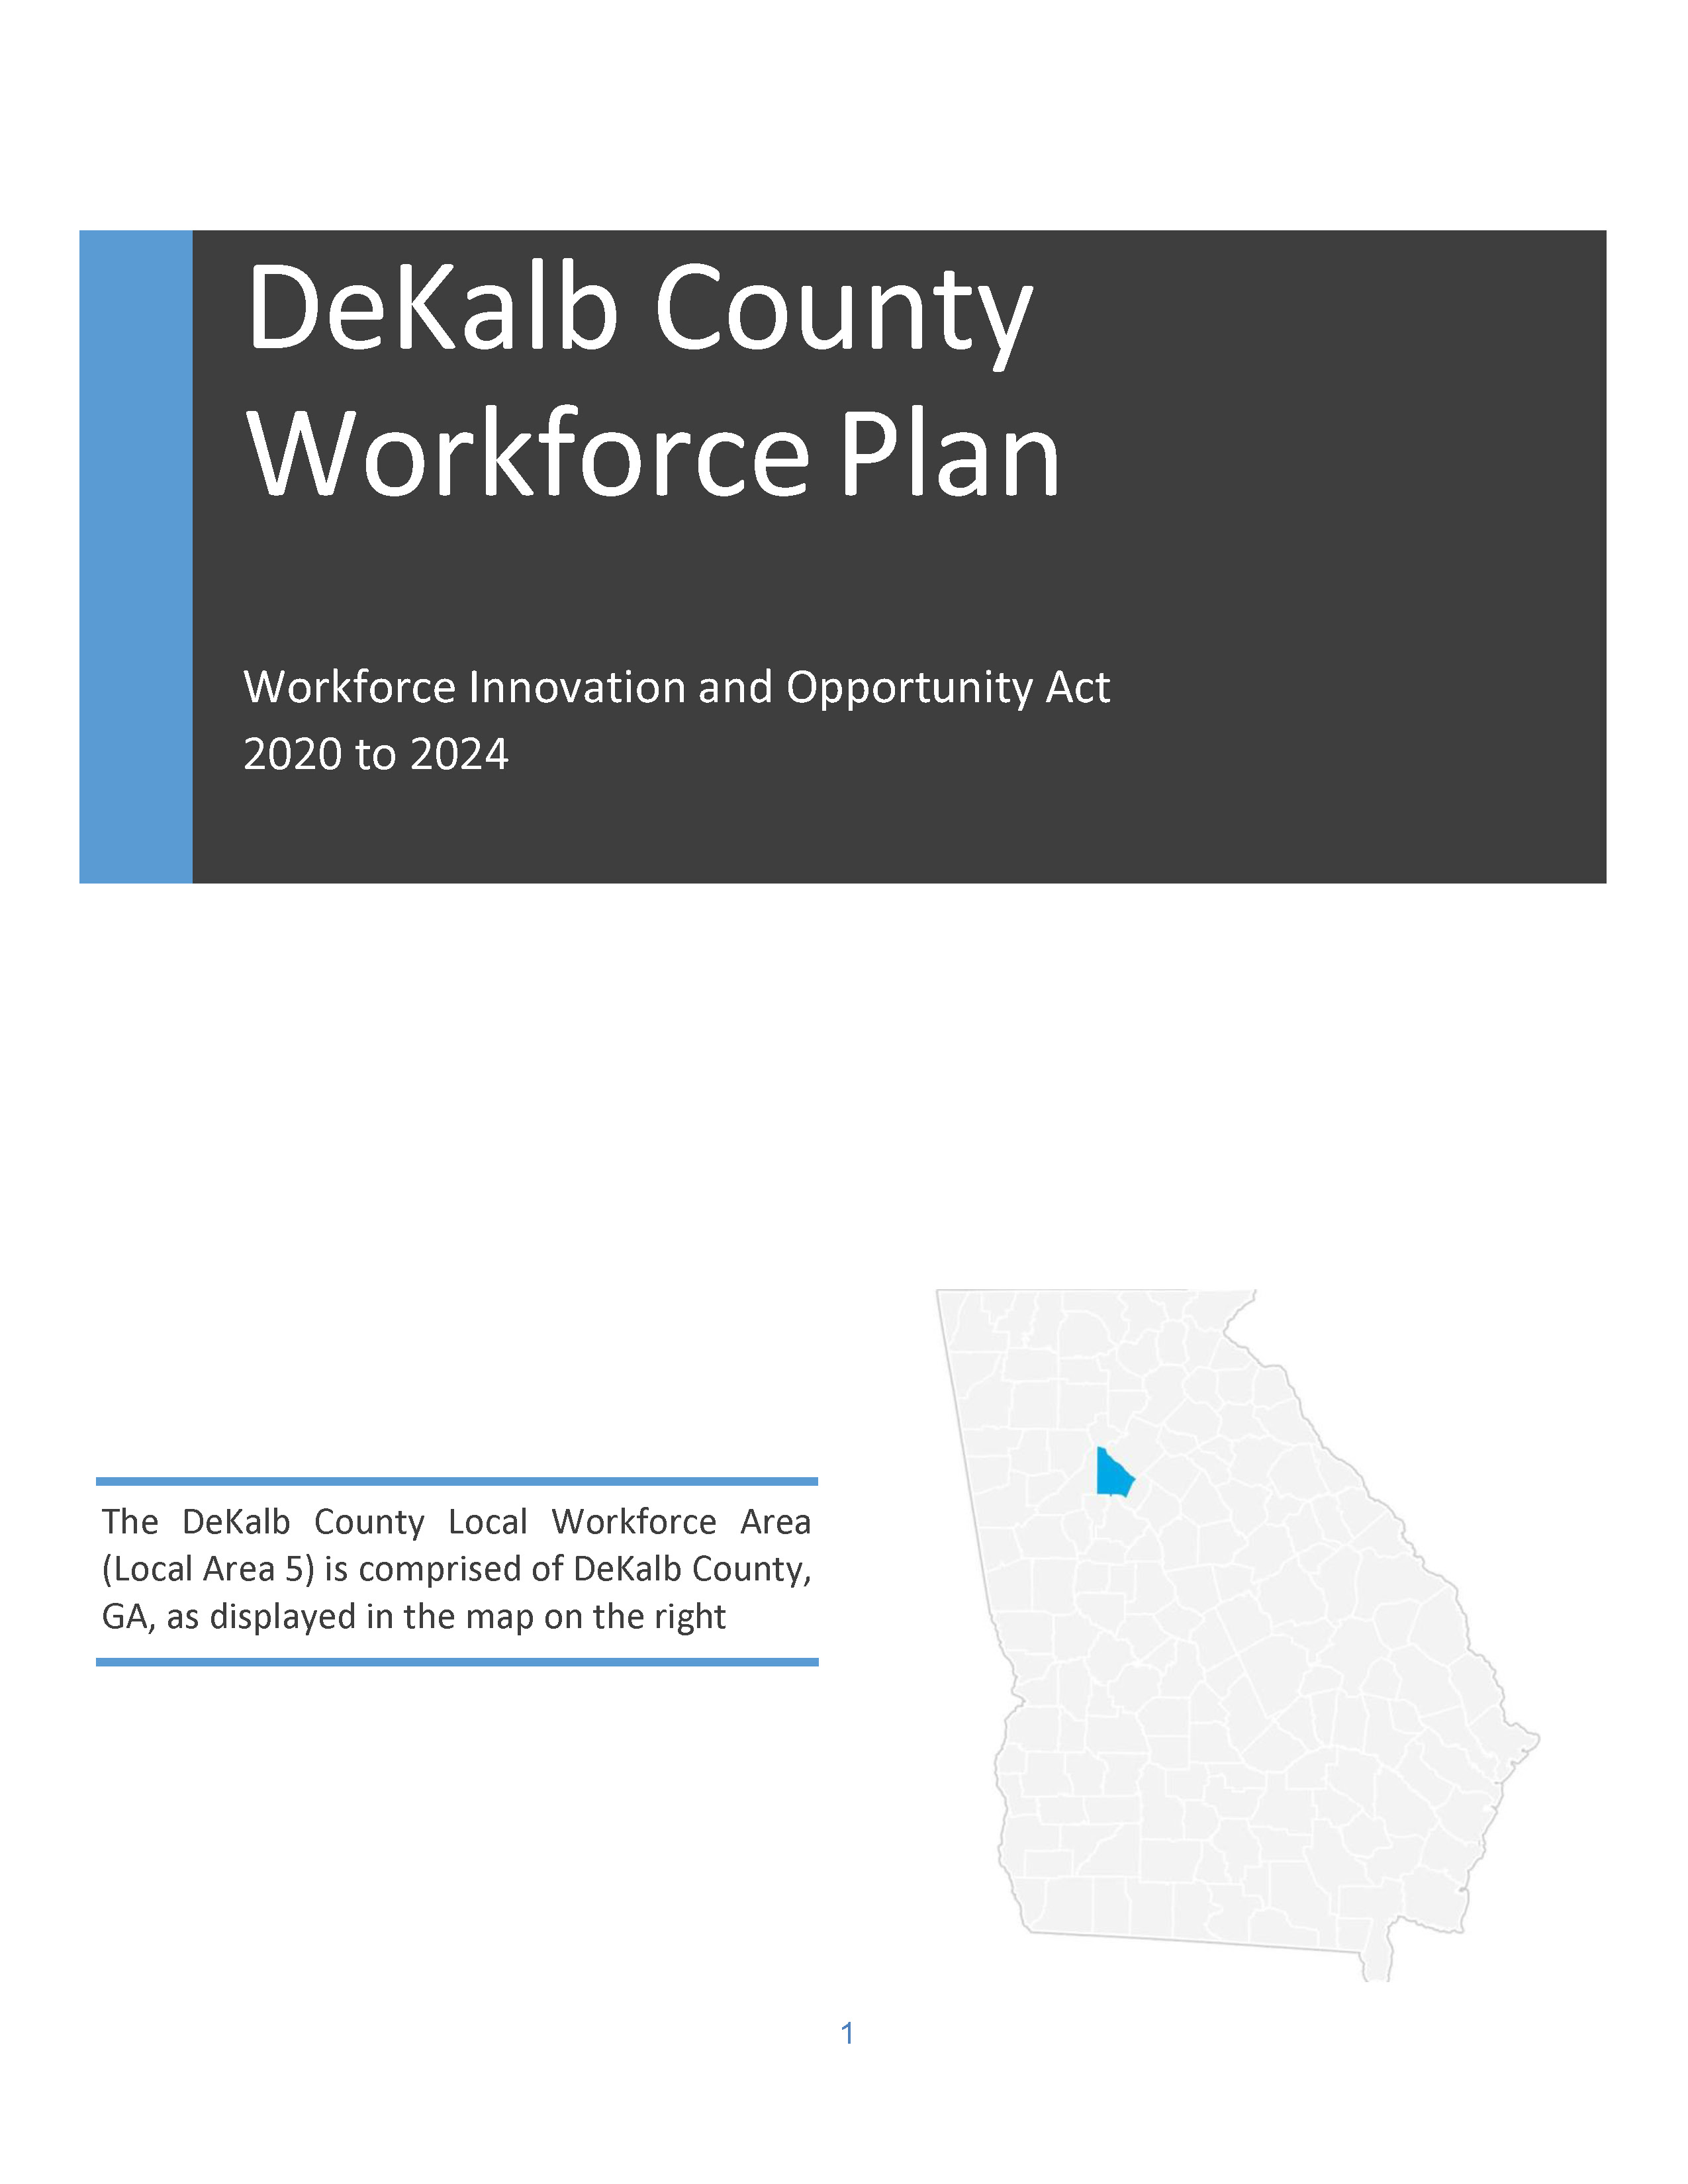 DeKalb County Workforce Local Plan